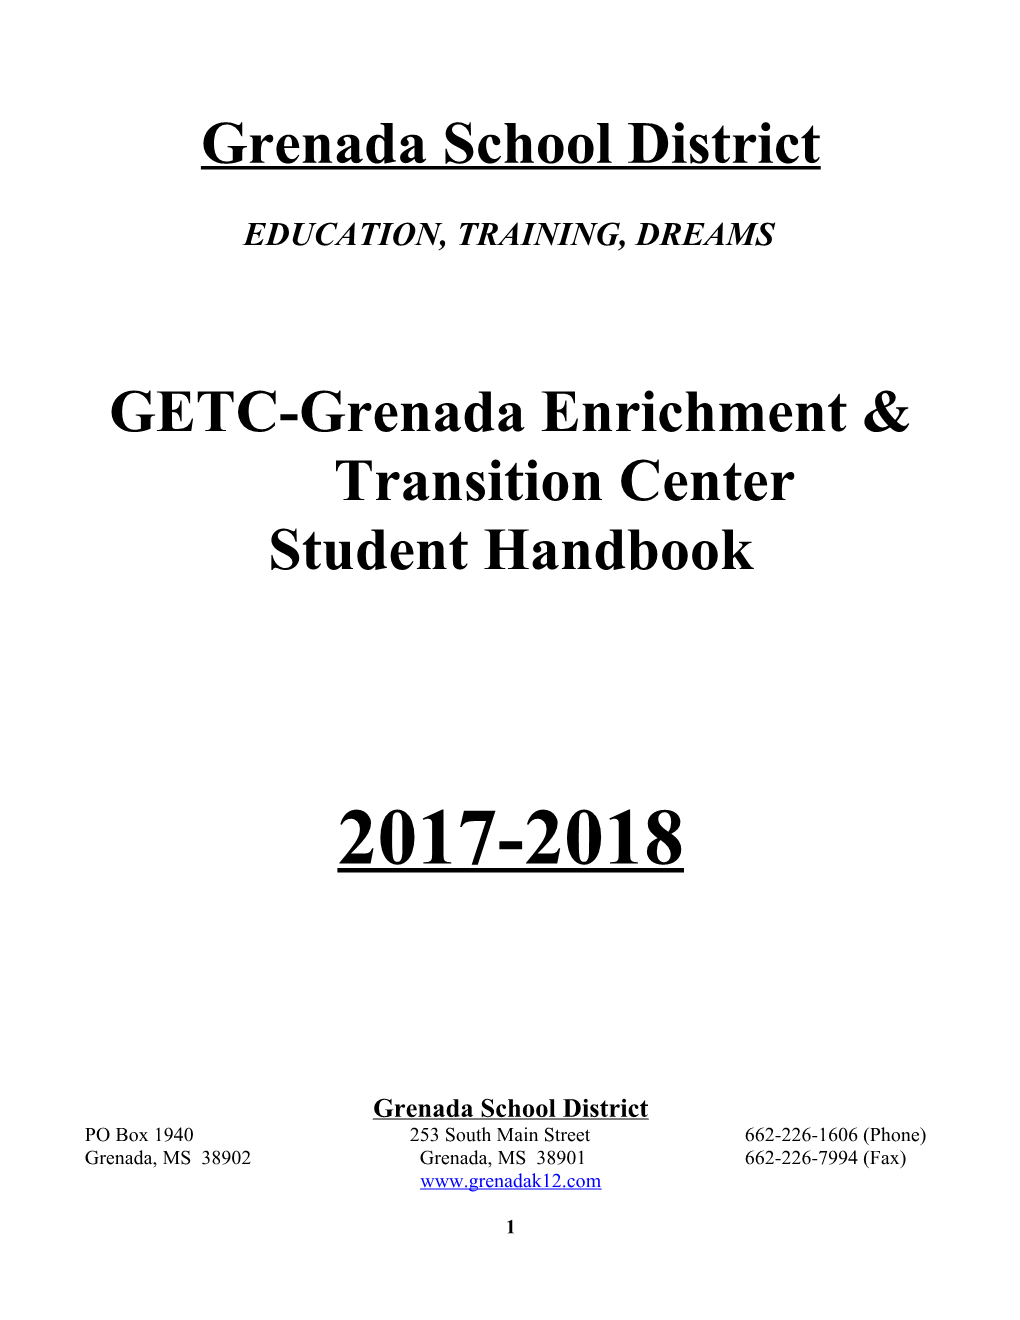 GETC-Grenada Enrichment & Transition Center